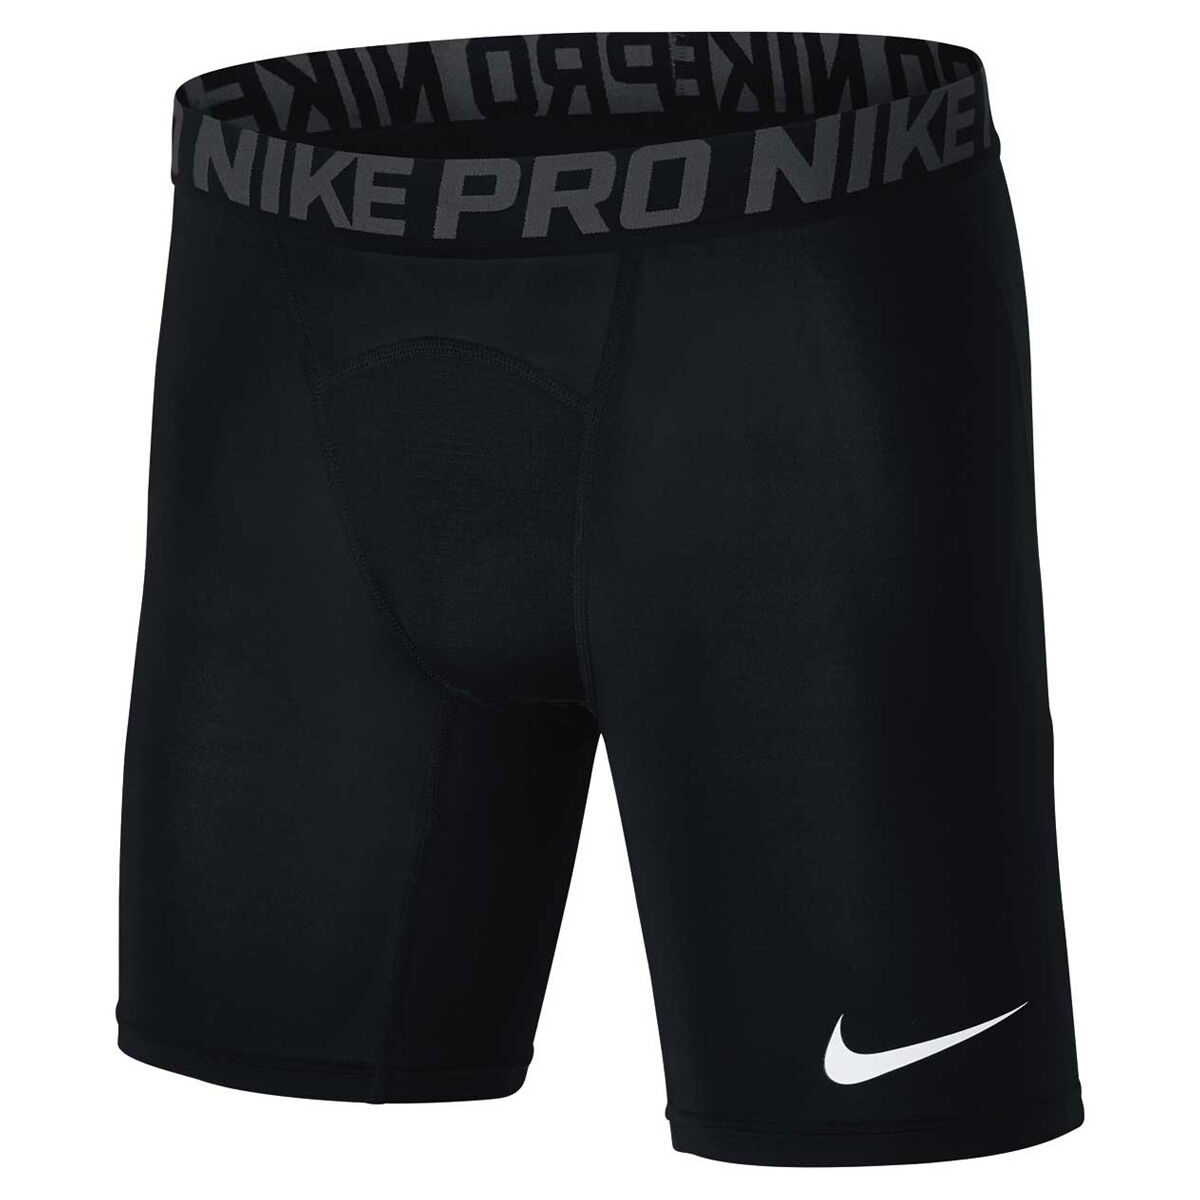 Mens Nike Pro Compression Shorts Black 